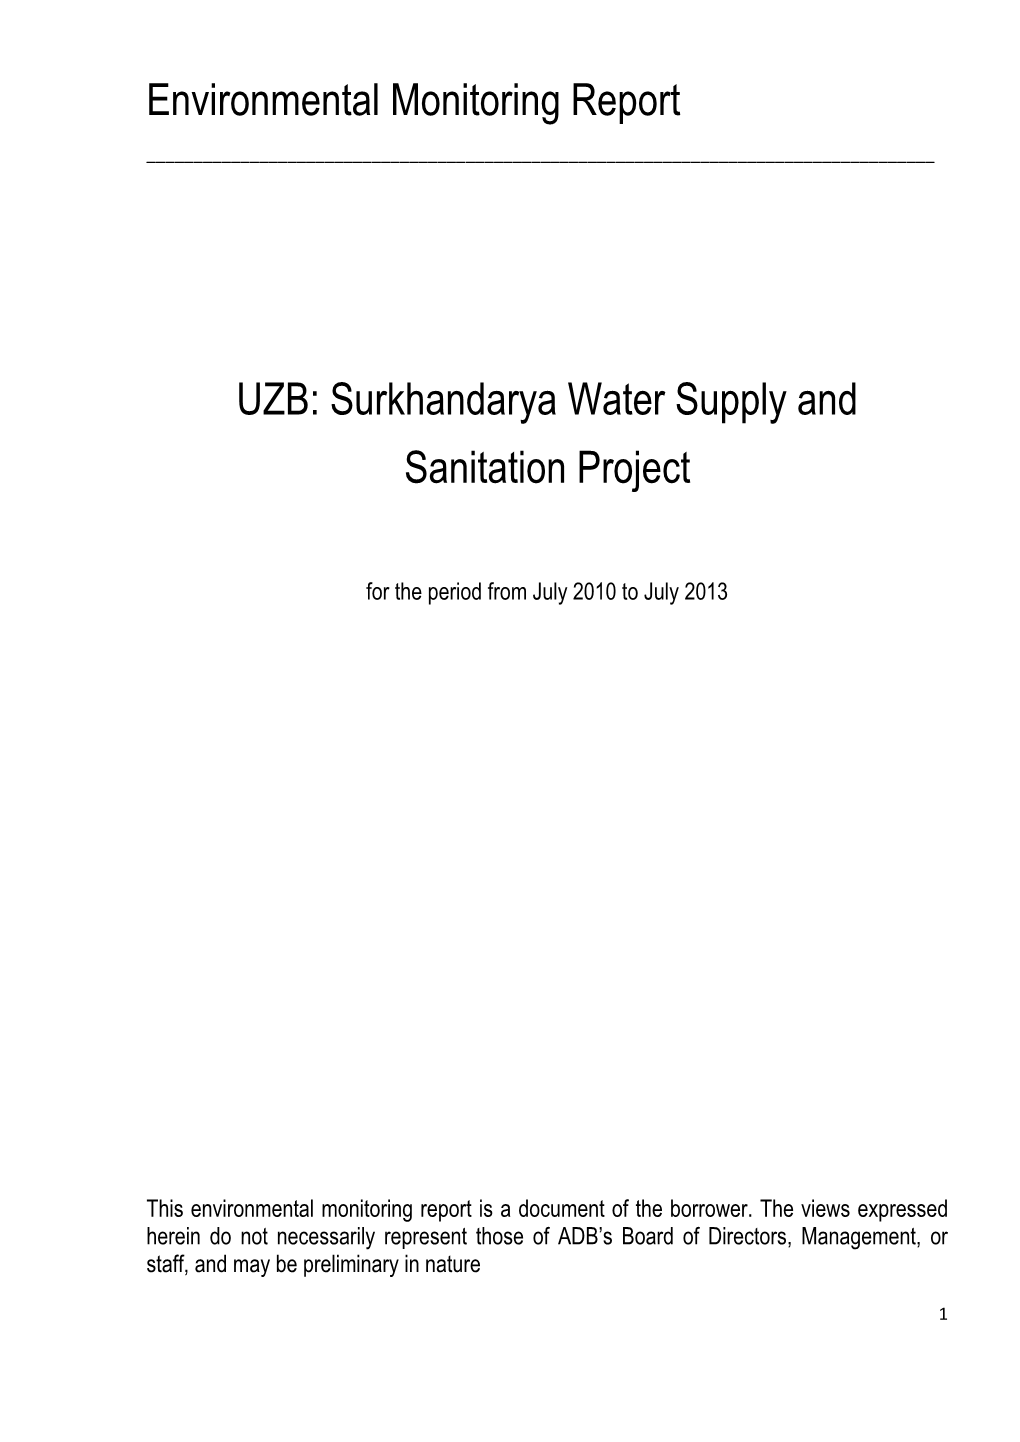 Surkhandarya Water Supply and Sanitation Project